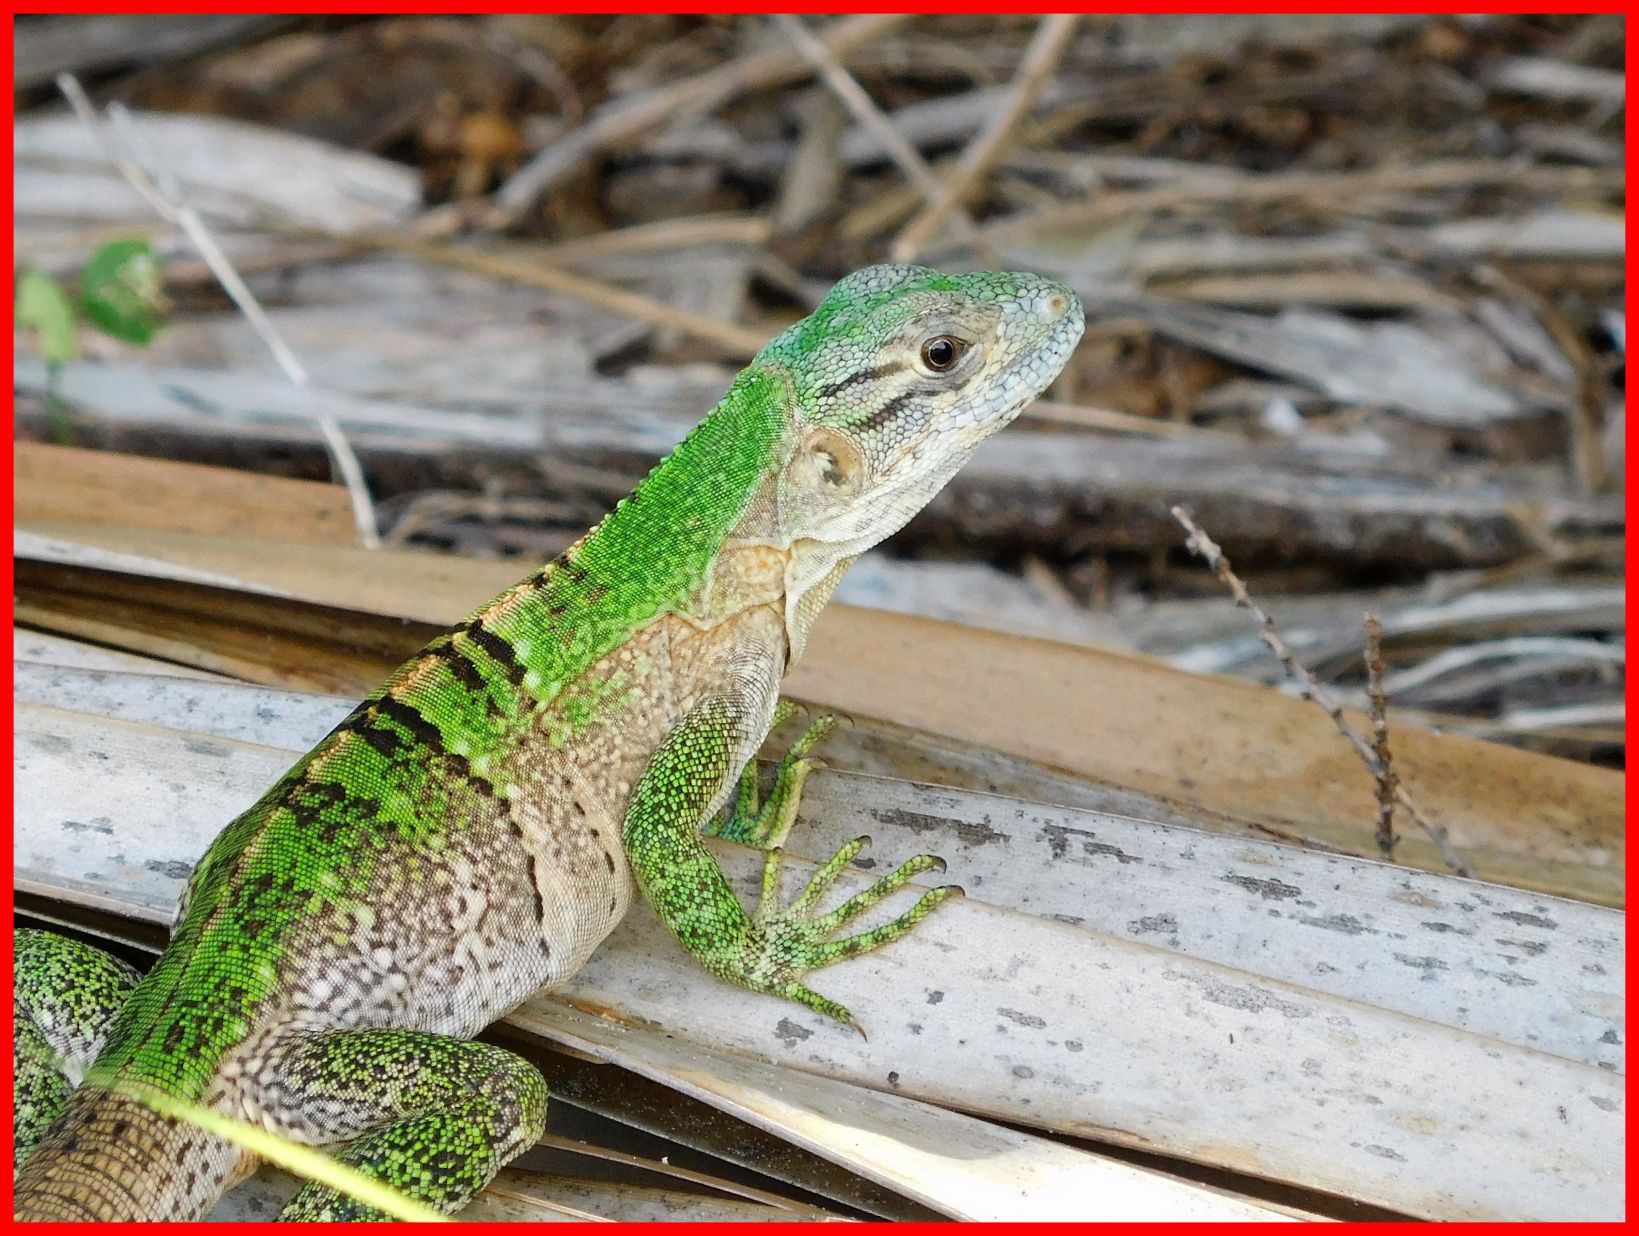 Awesome Canon Vixia Hf Wild Green Iguana Image For As Pet Concept ...